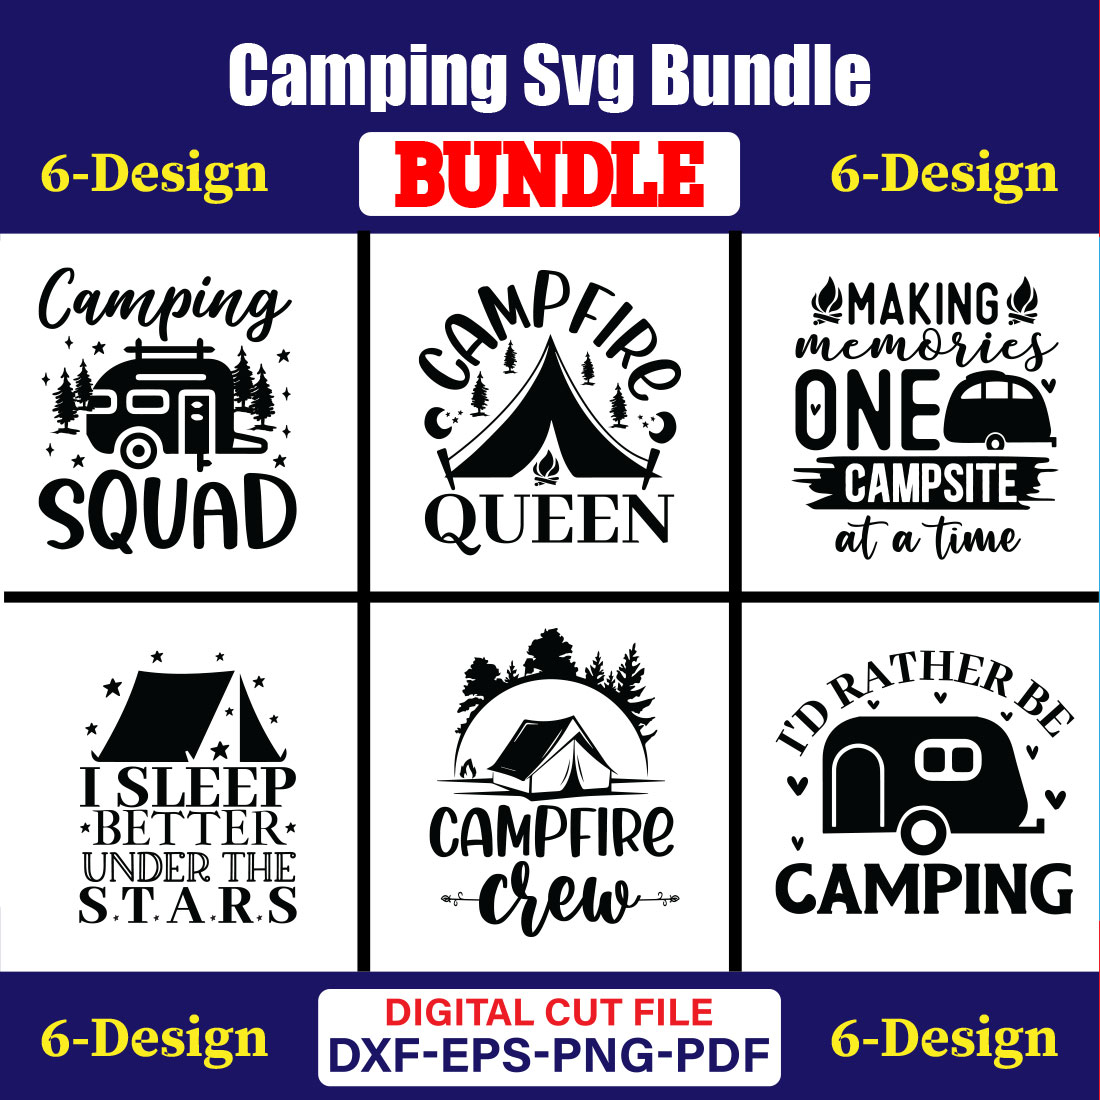 Camping T-shirt Design Bundle Vol-8 cover image.